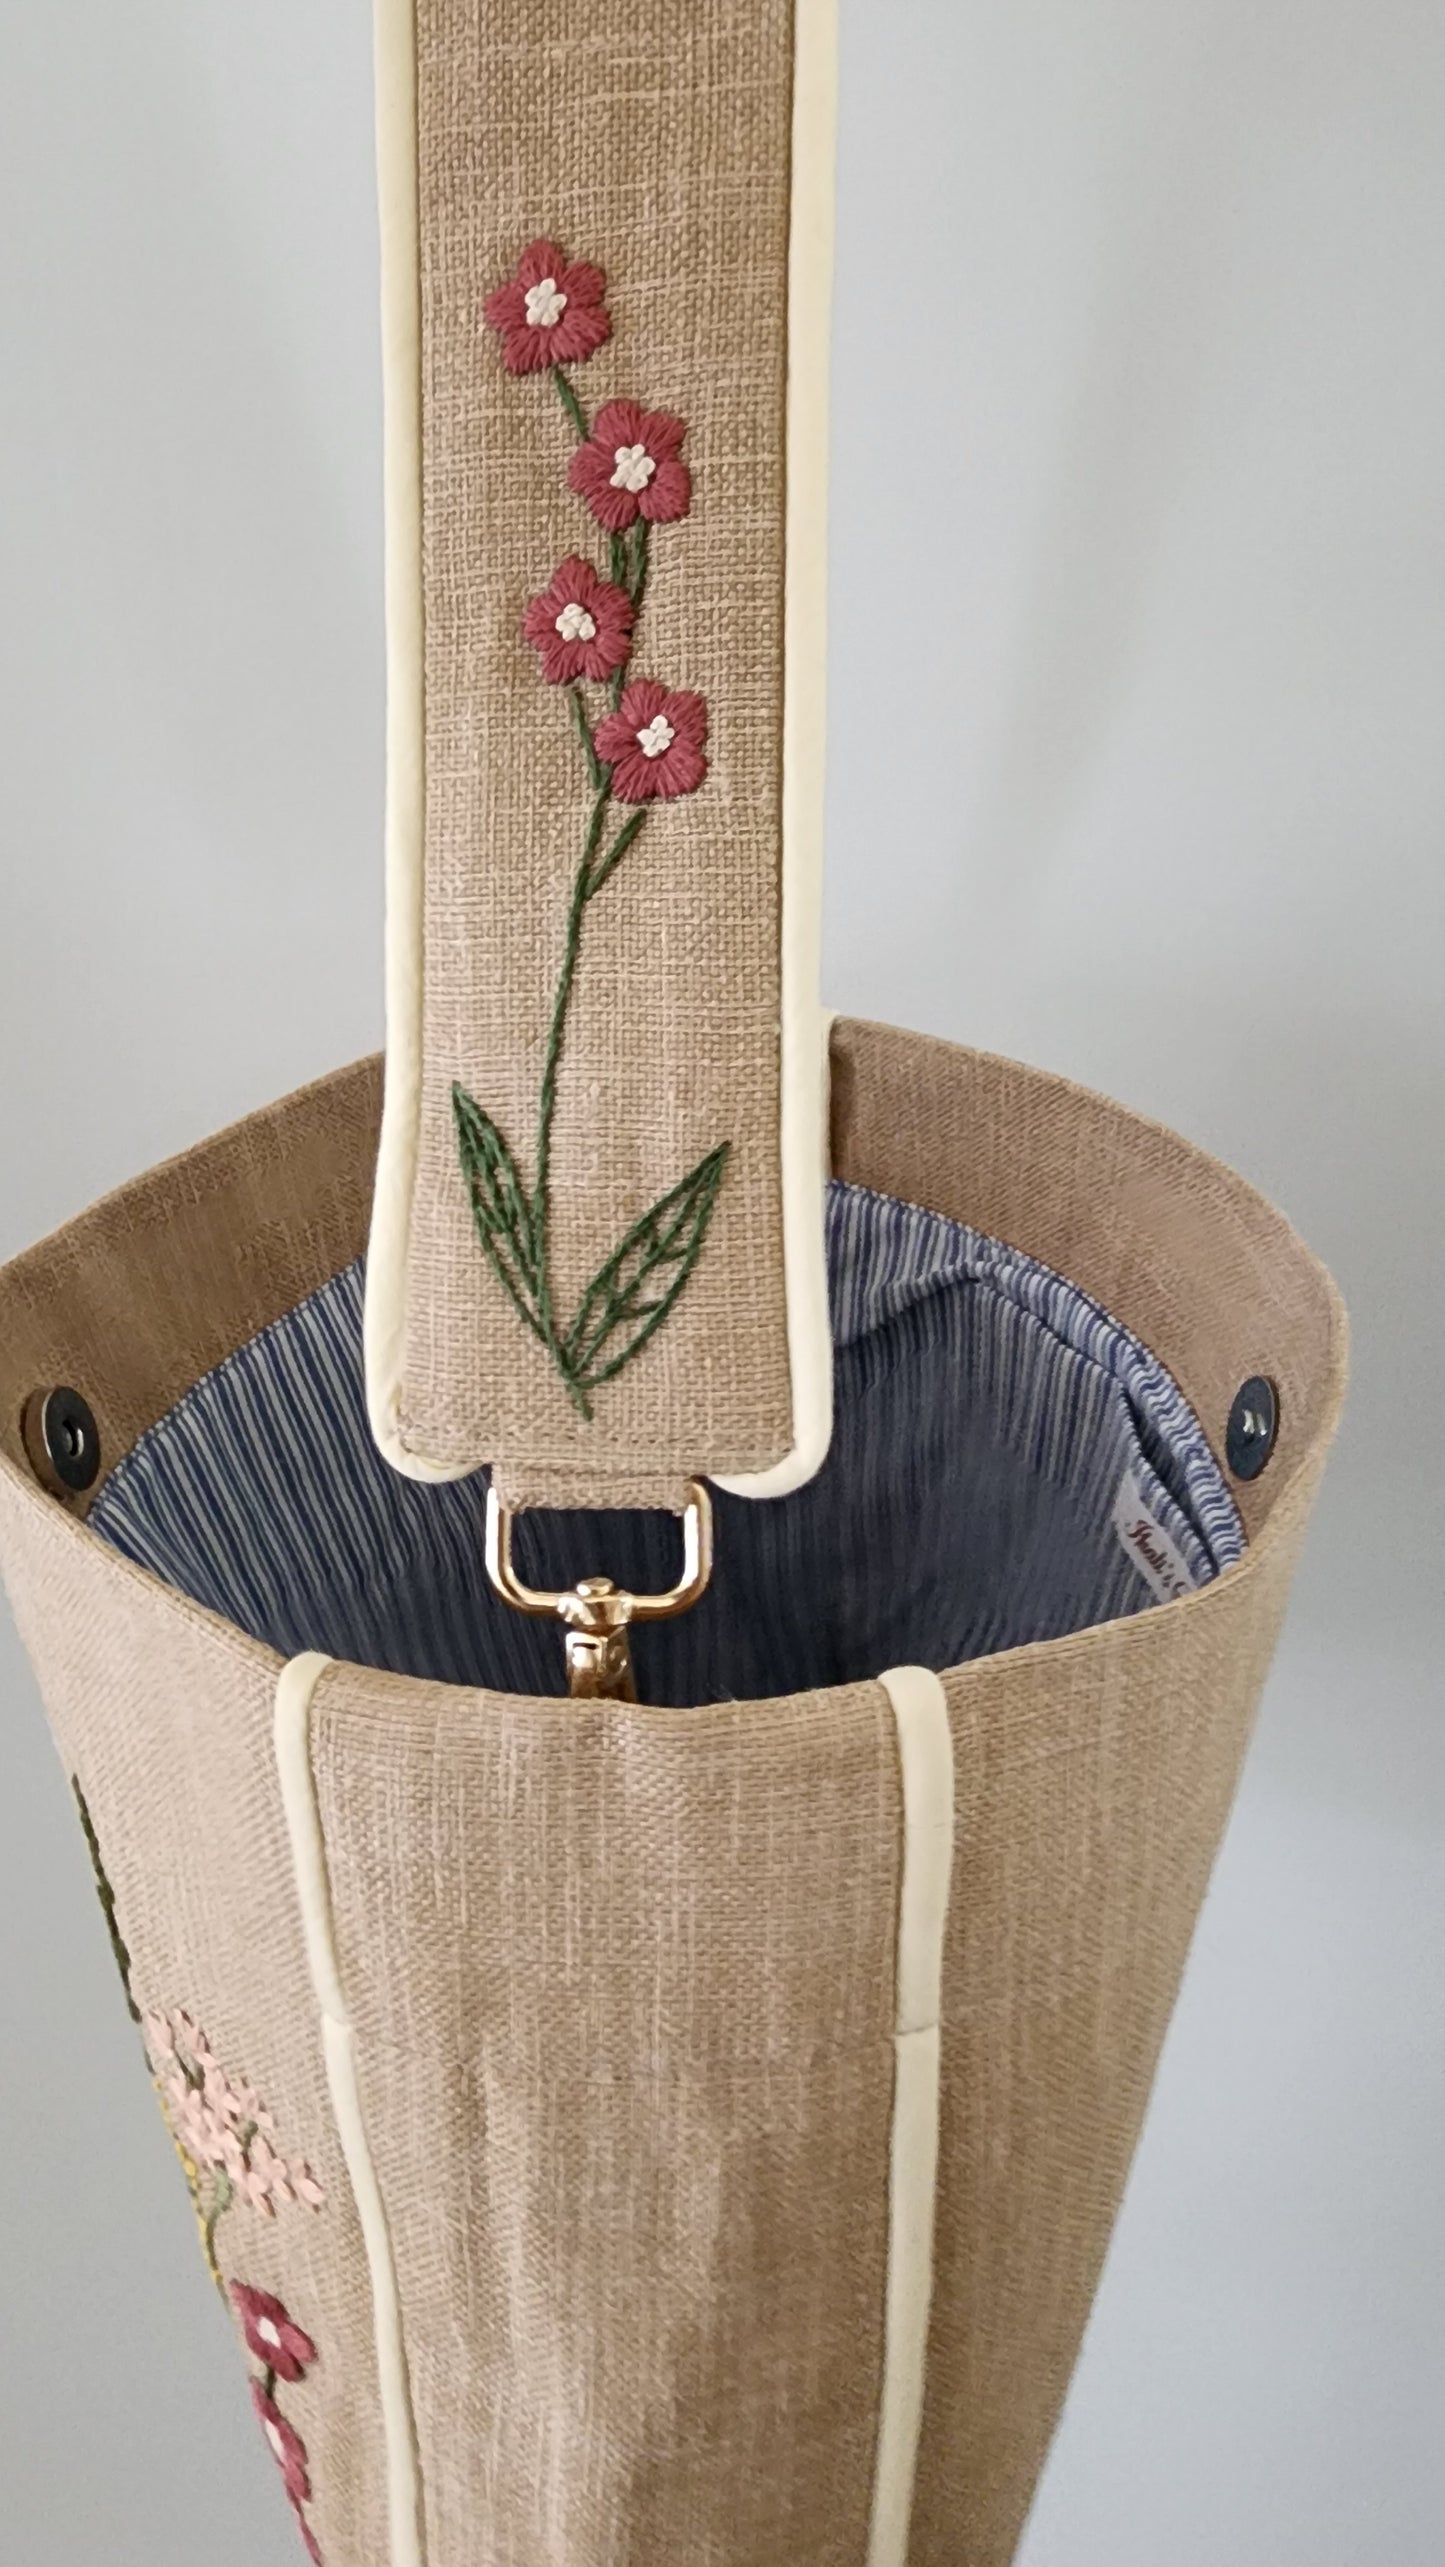 Ikali - Mix Garden - Hand-embroidered Kumstu bo Bag